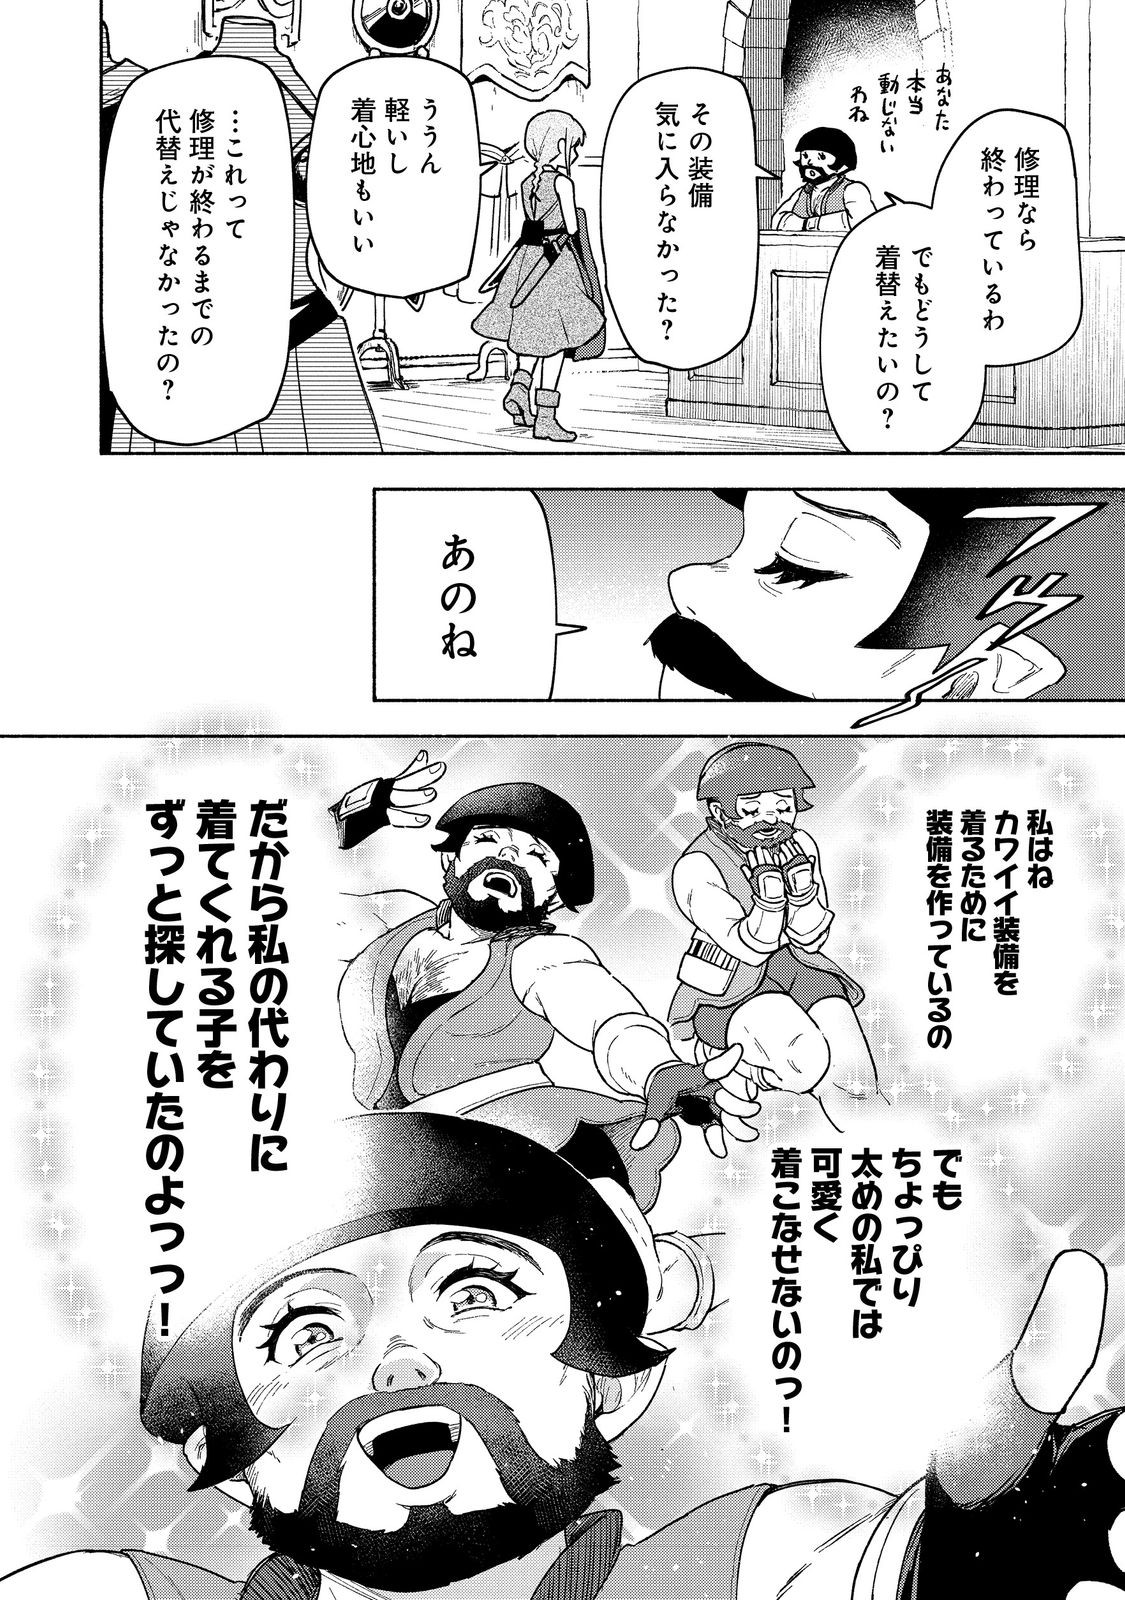 Otome Game no Heroine de Saikyou Survival - Chapter 22 - Page 32